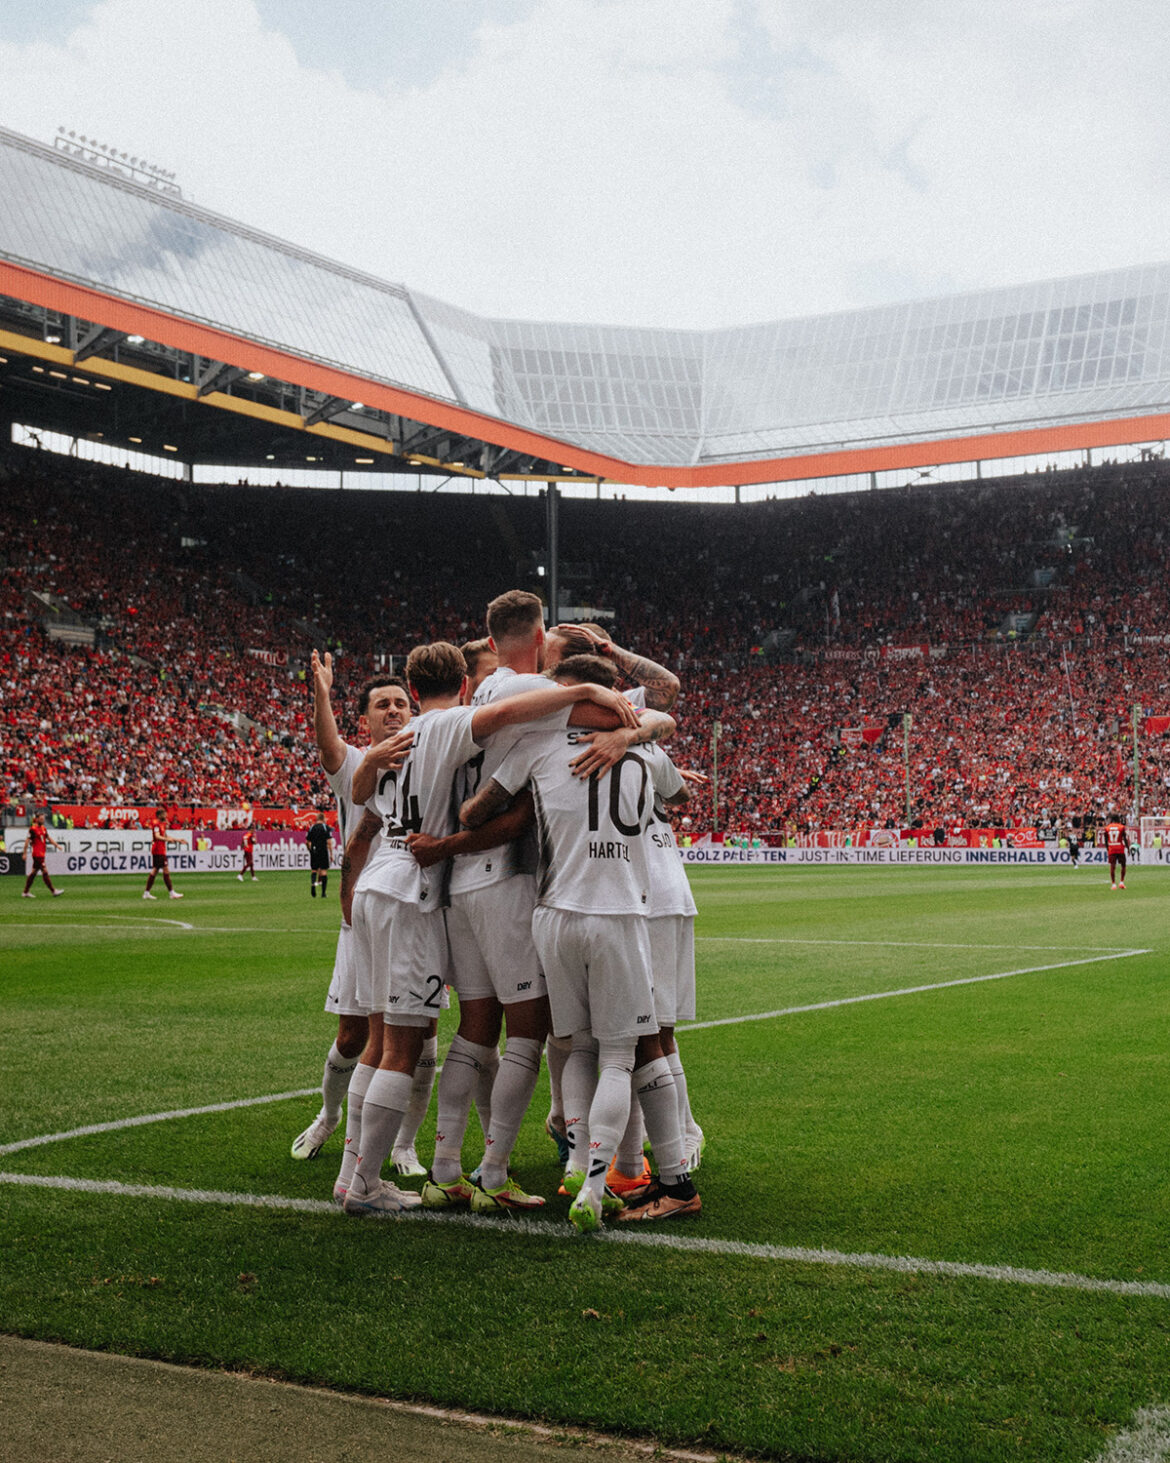 St. Pauli fik god sæsonstart. Dansker fik debut